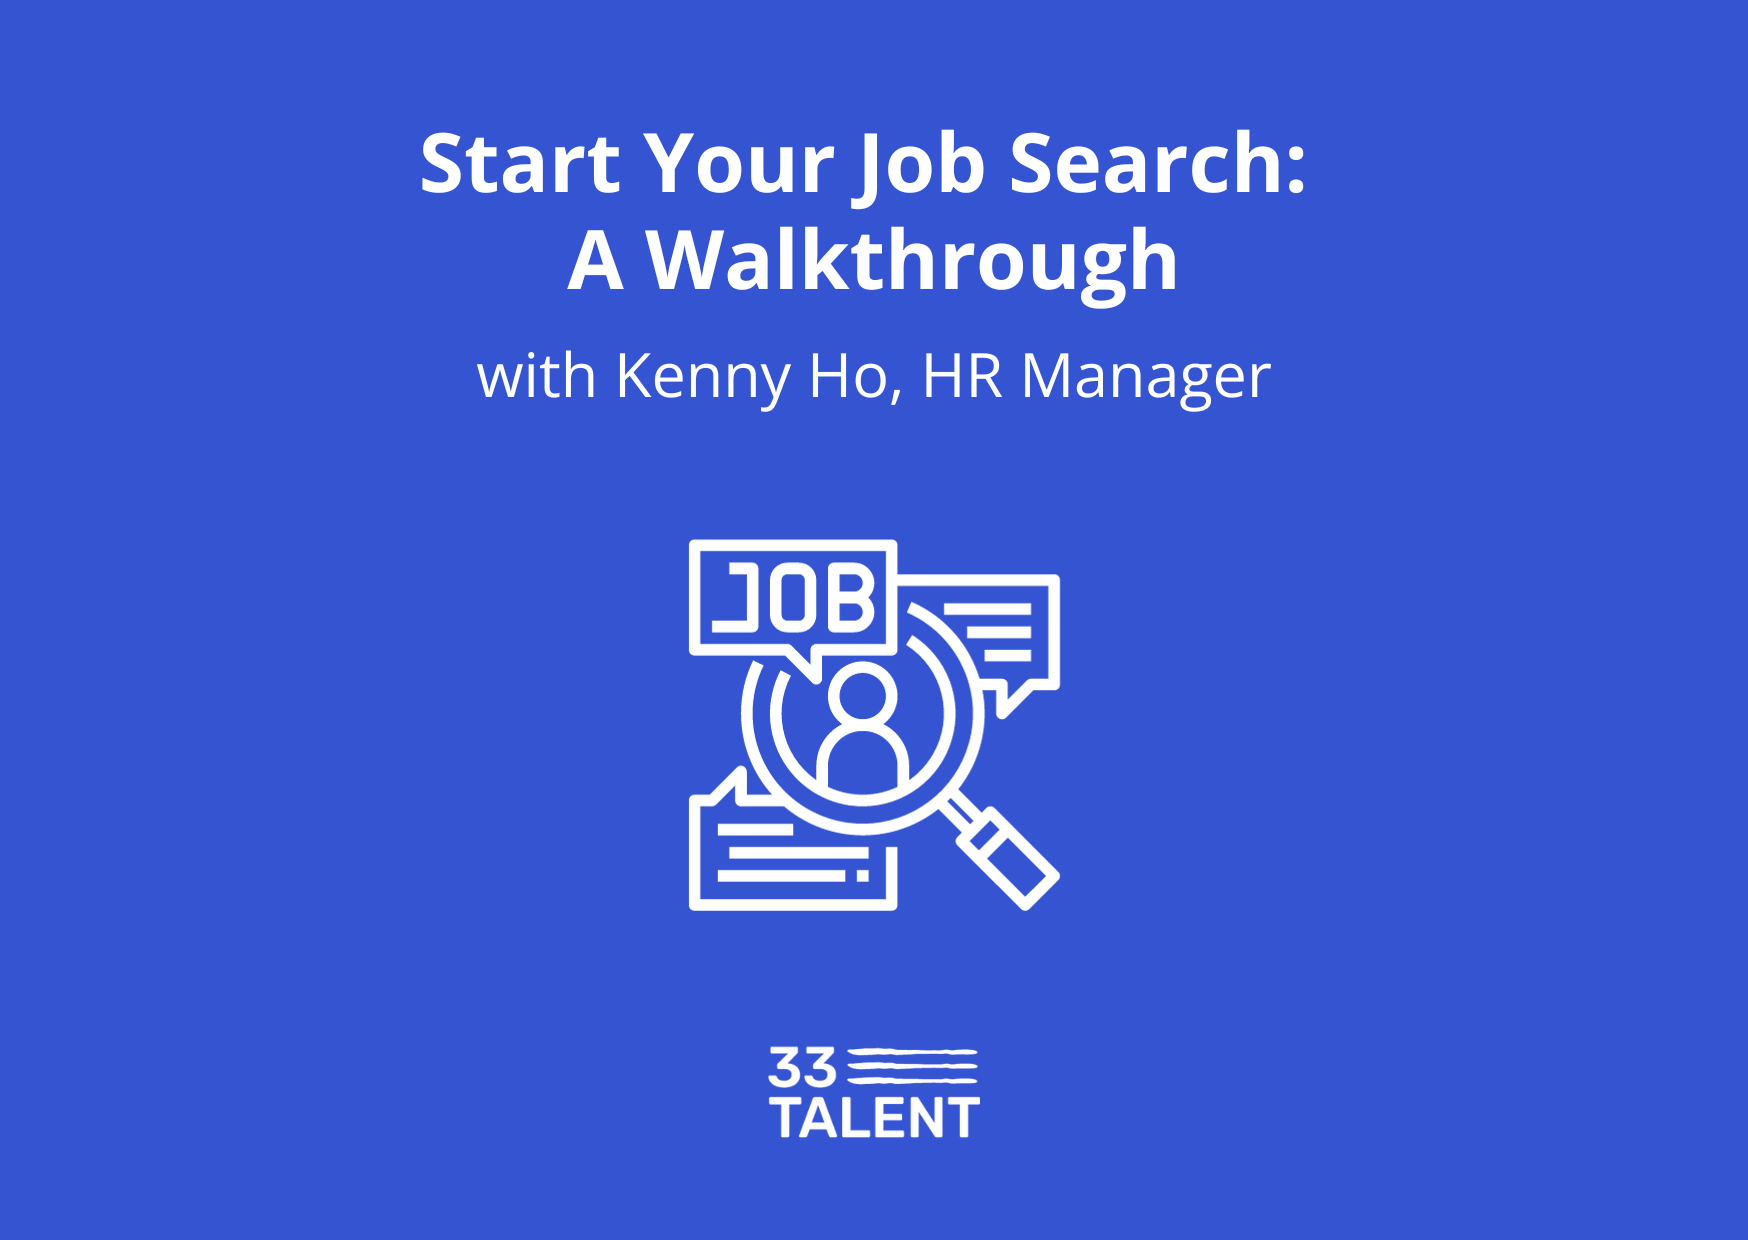 Video: Start Your Job Search: A Walkthrough